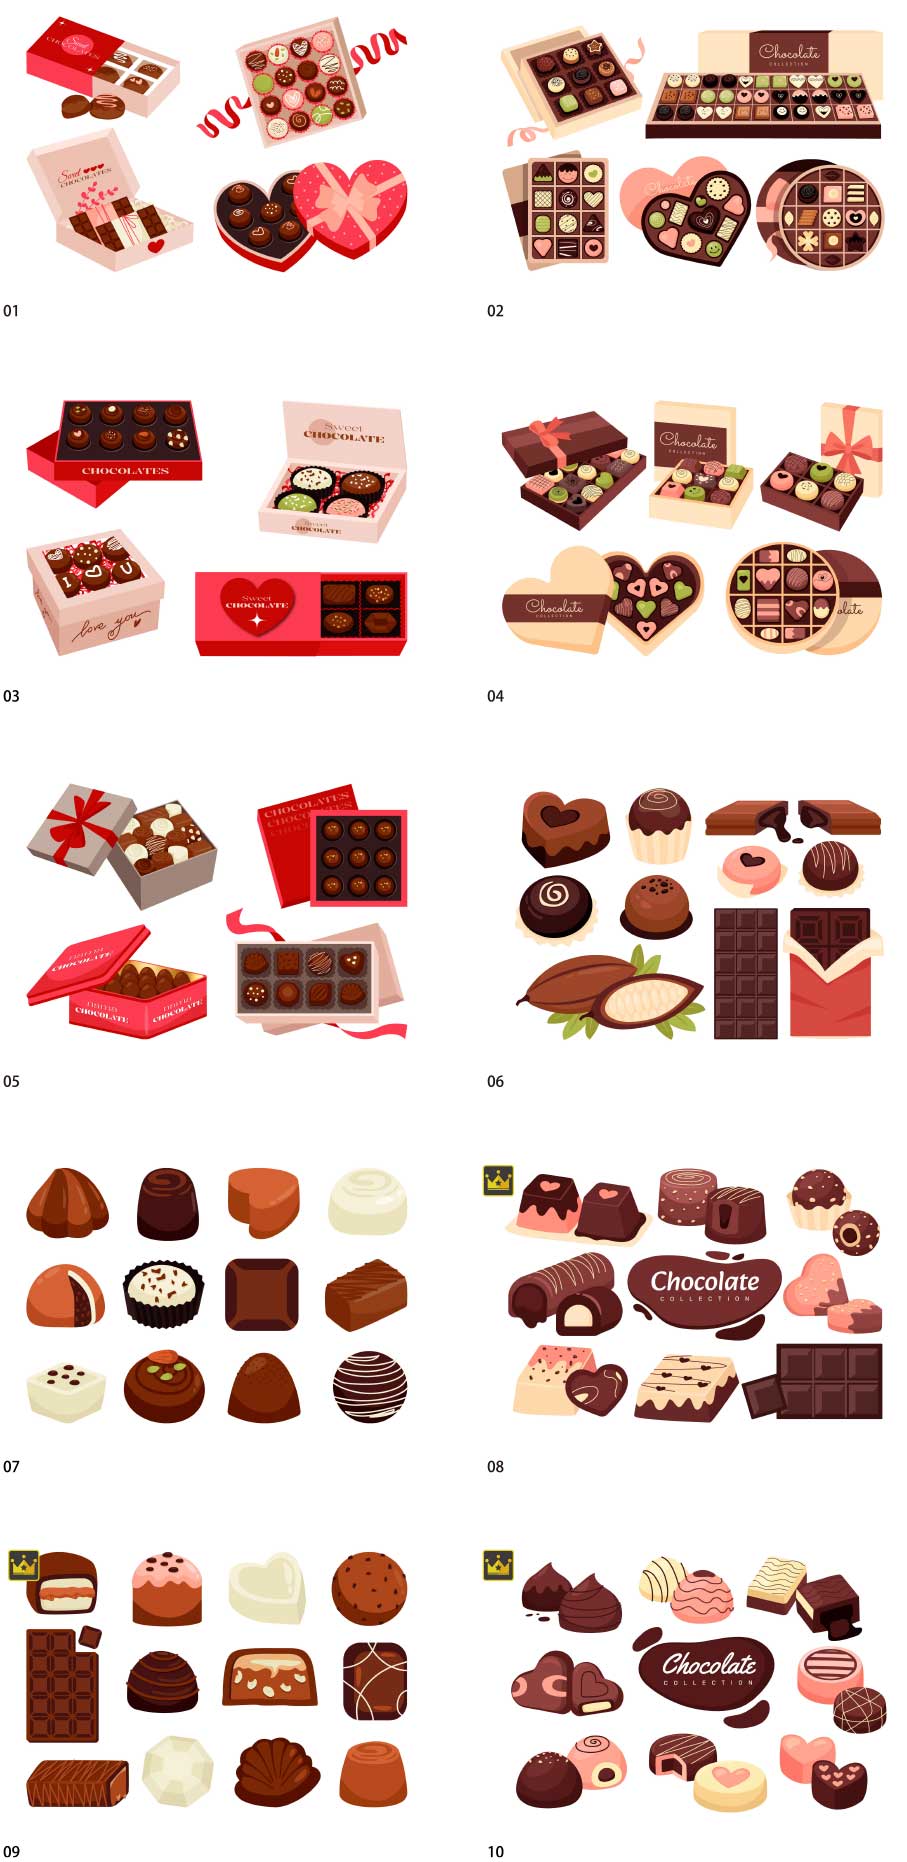 Chocolate illustration collection